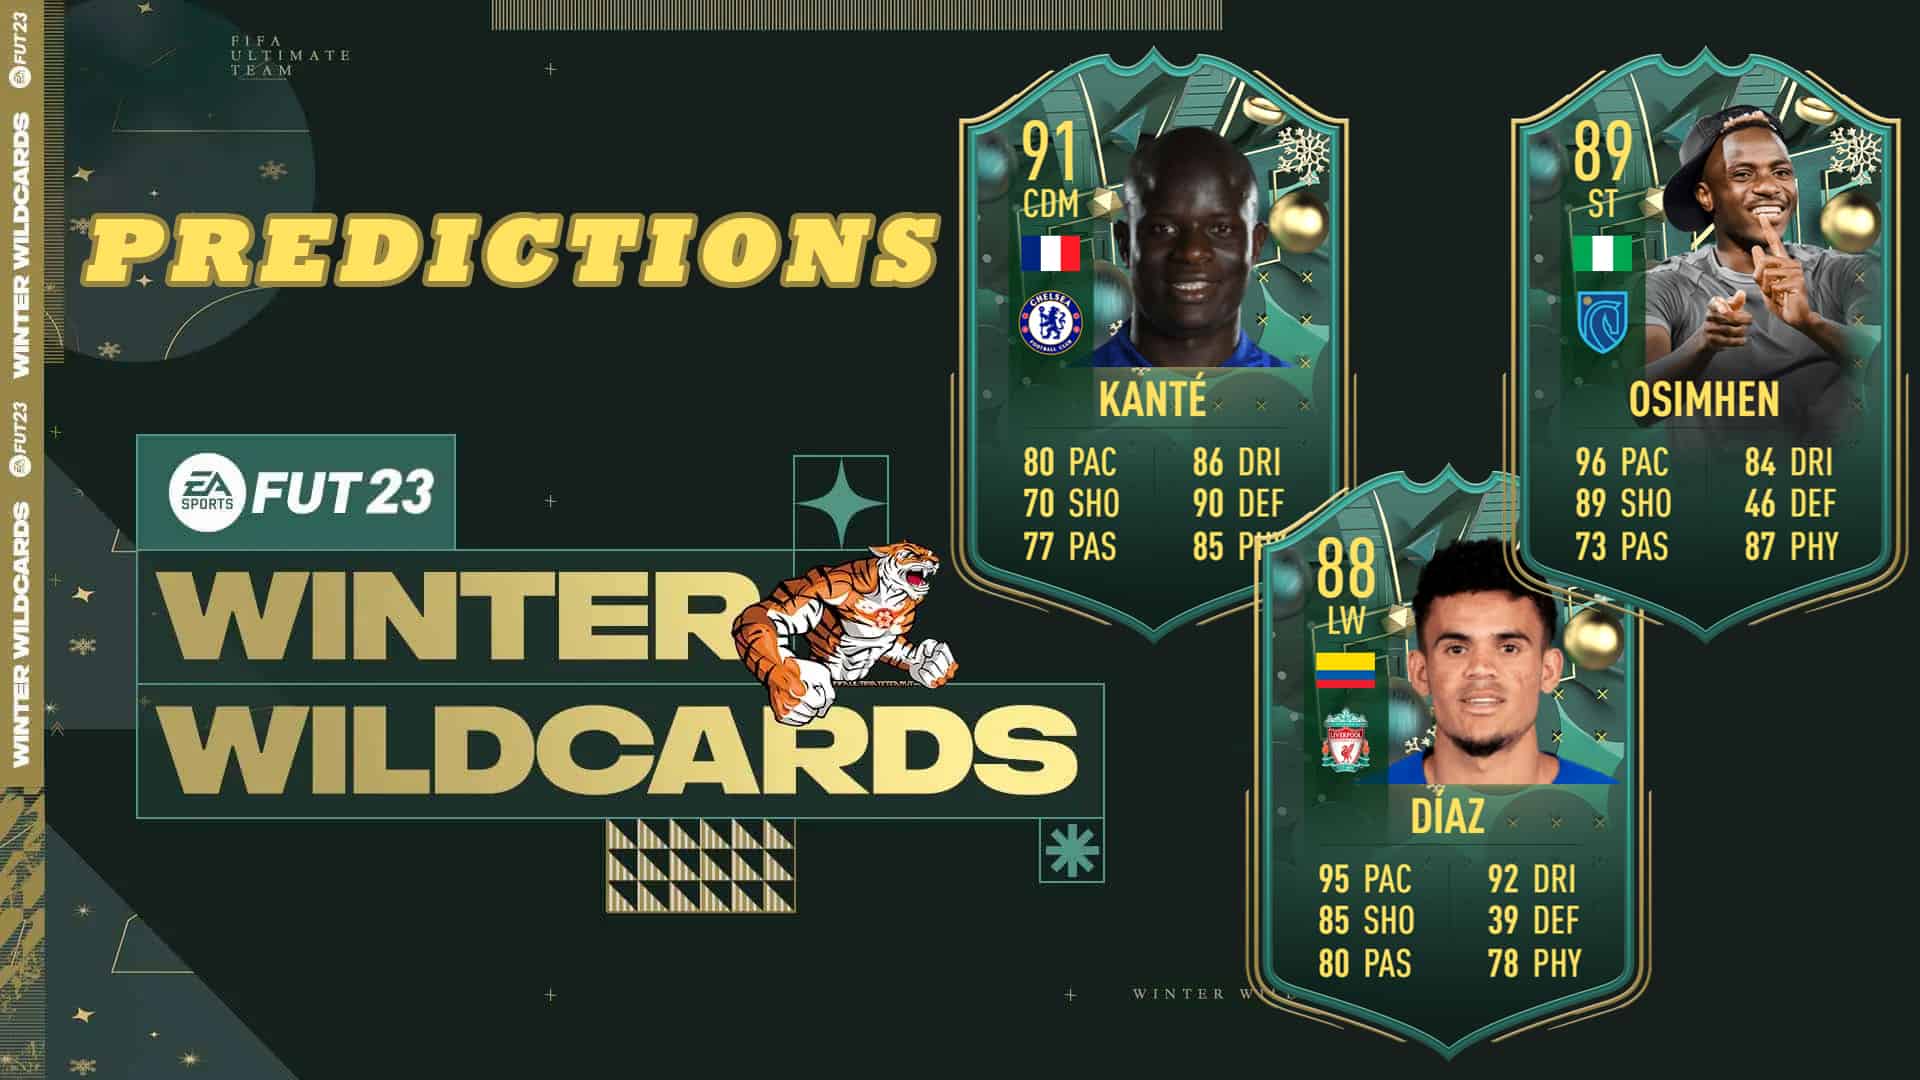 FIFA 23 WINTER WILDCARDS PREDICTIONS